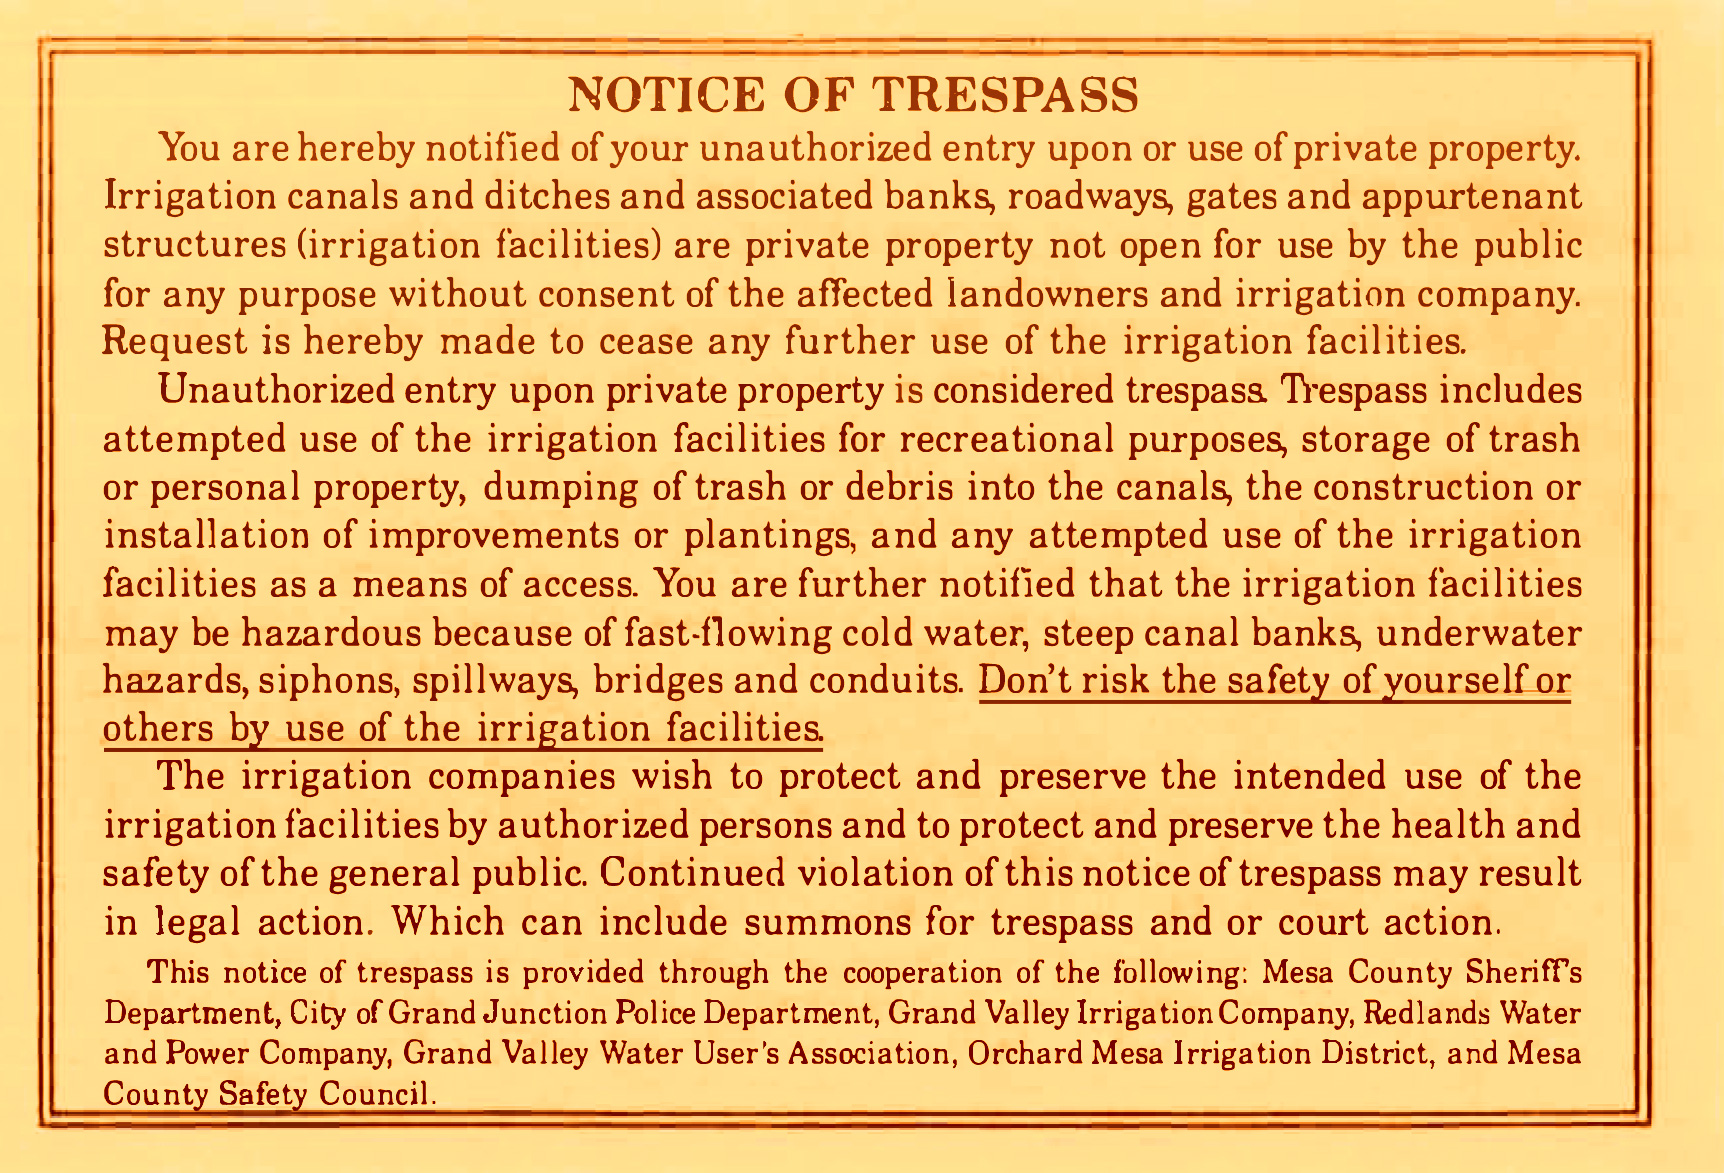 orange notice of trespass card explaining notification of unauthorized entry onto private property